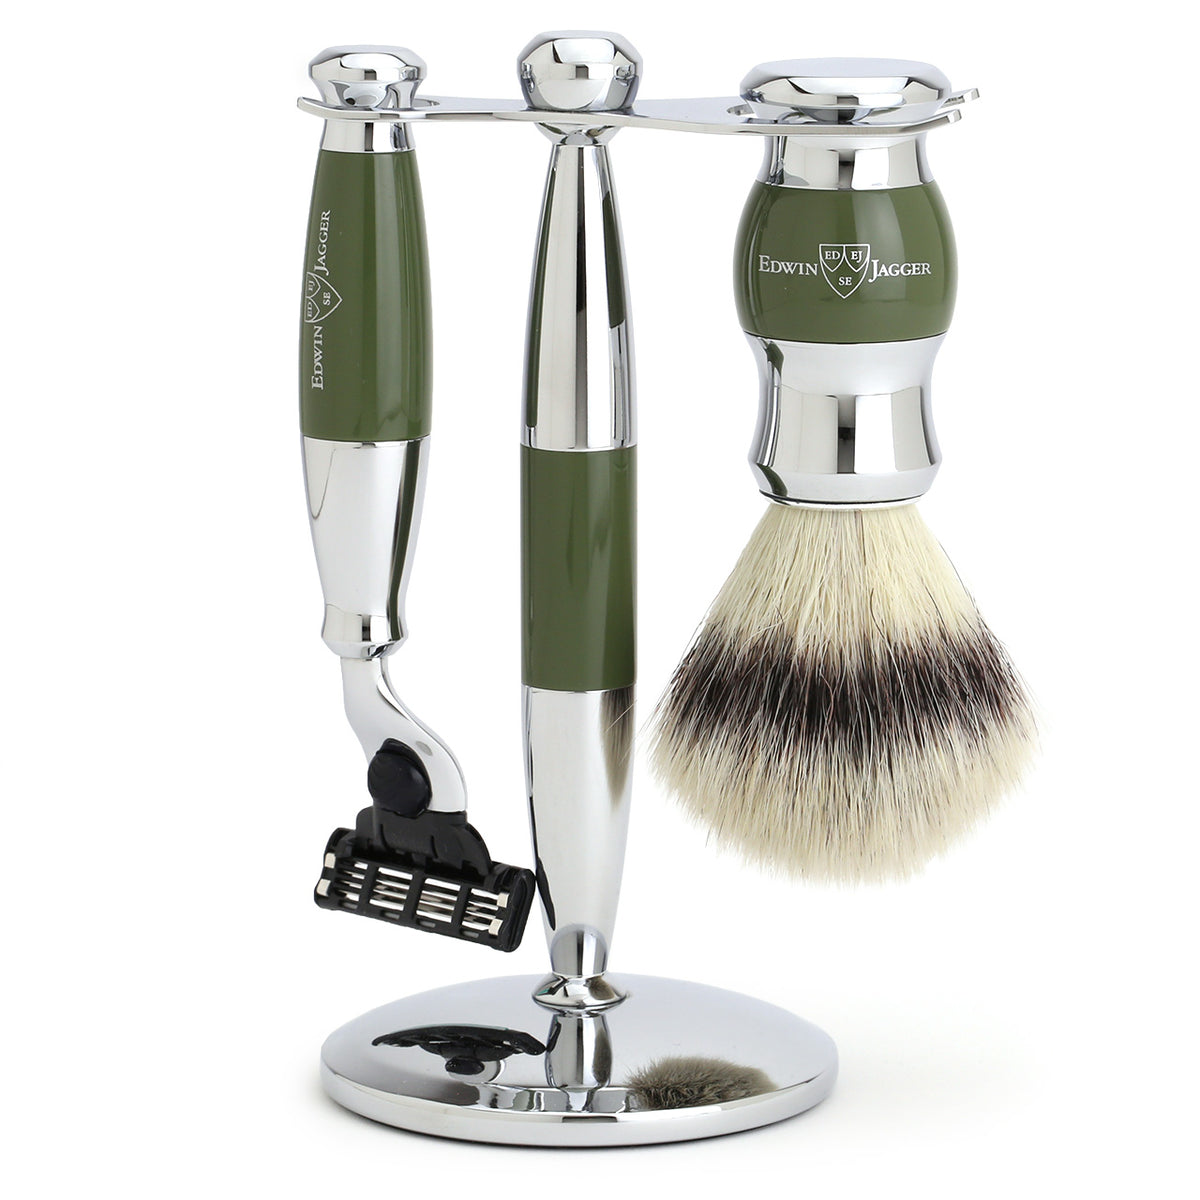 Edwin Jagger Shaving Set with Mach3 Razor, Shaving Brush &amp; Stand - Olive Green